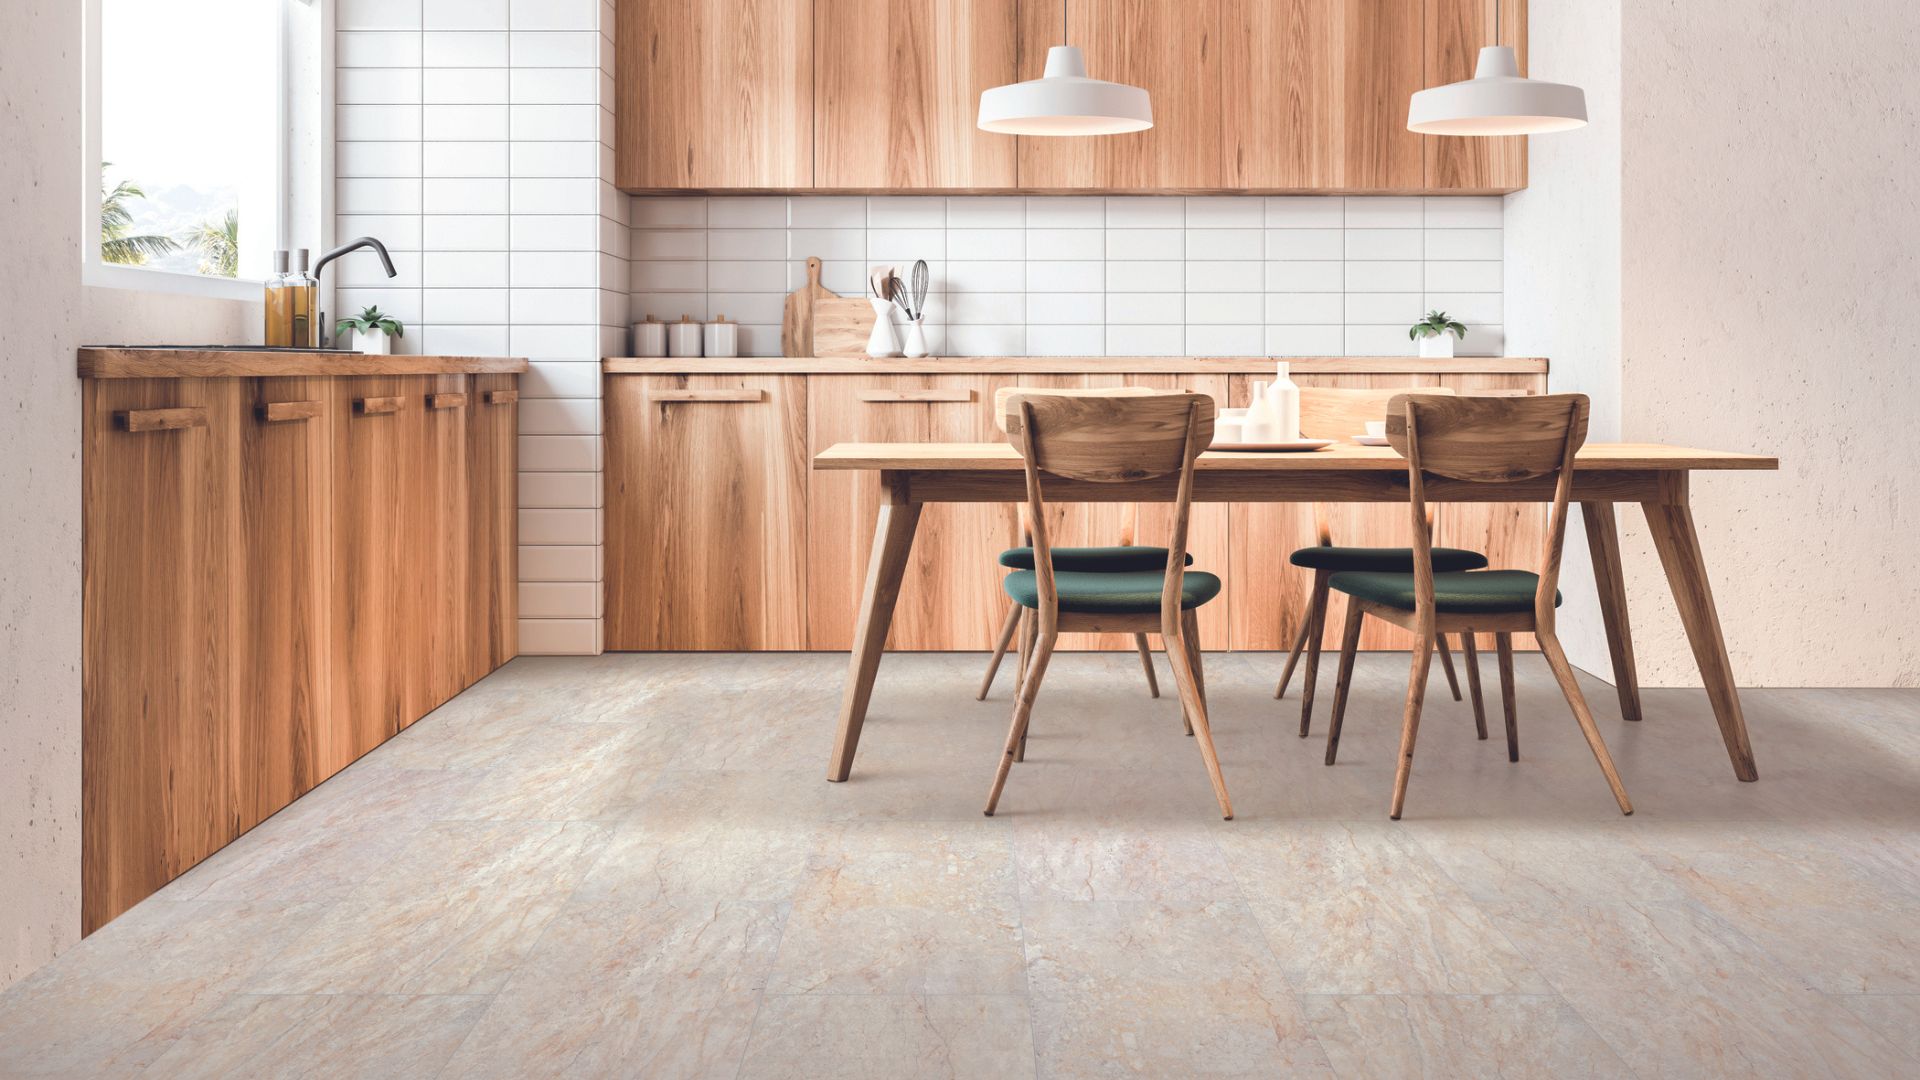 Waterproof luxury vinyl floors in a kitchen.